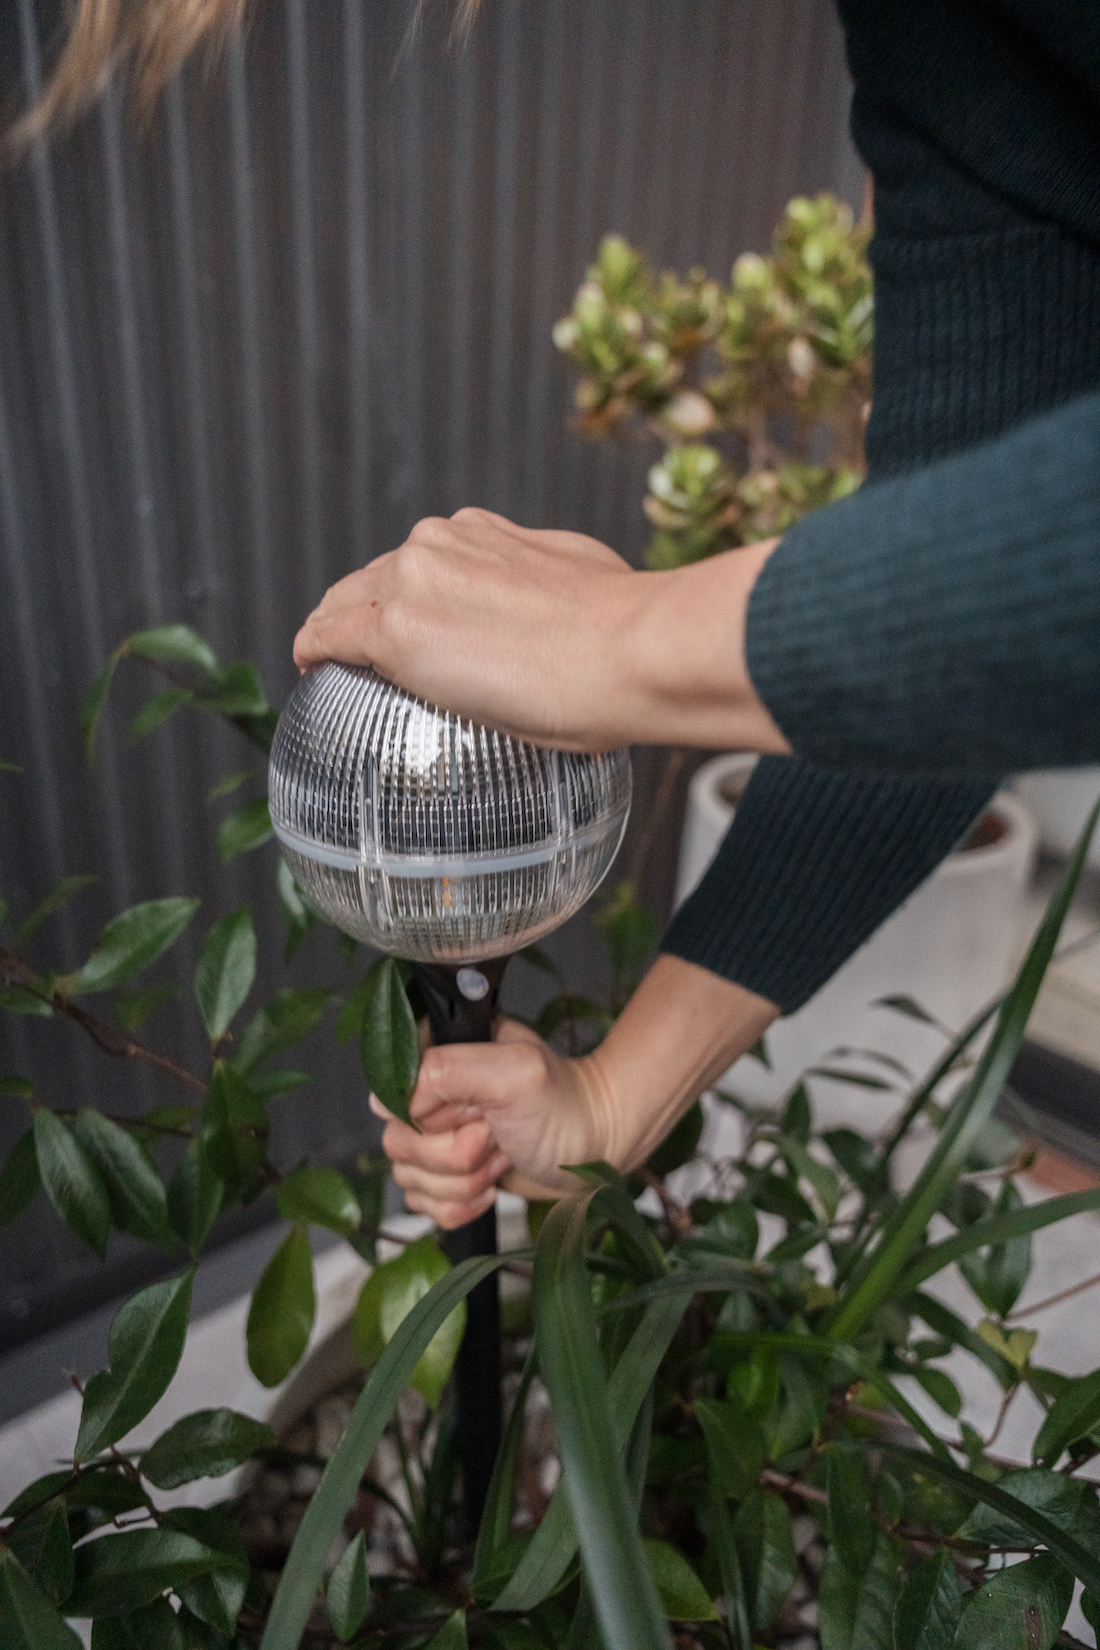 Adding solar lights to pots